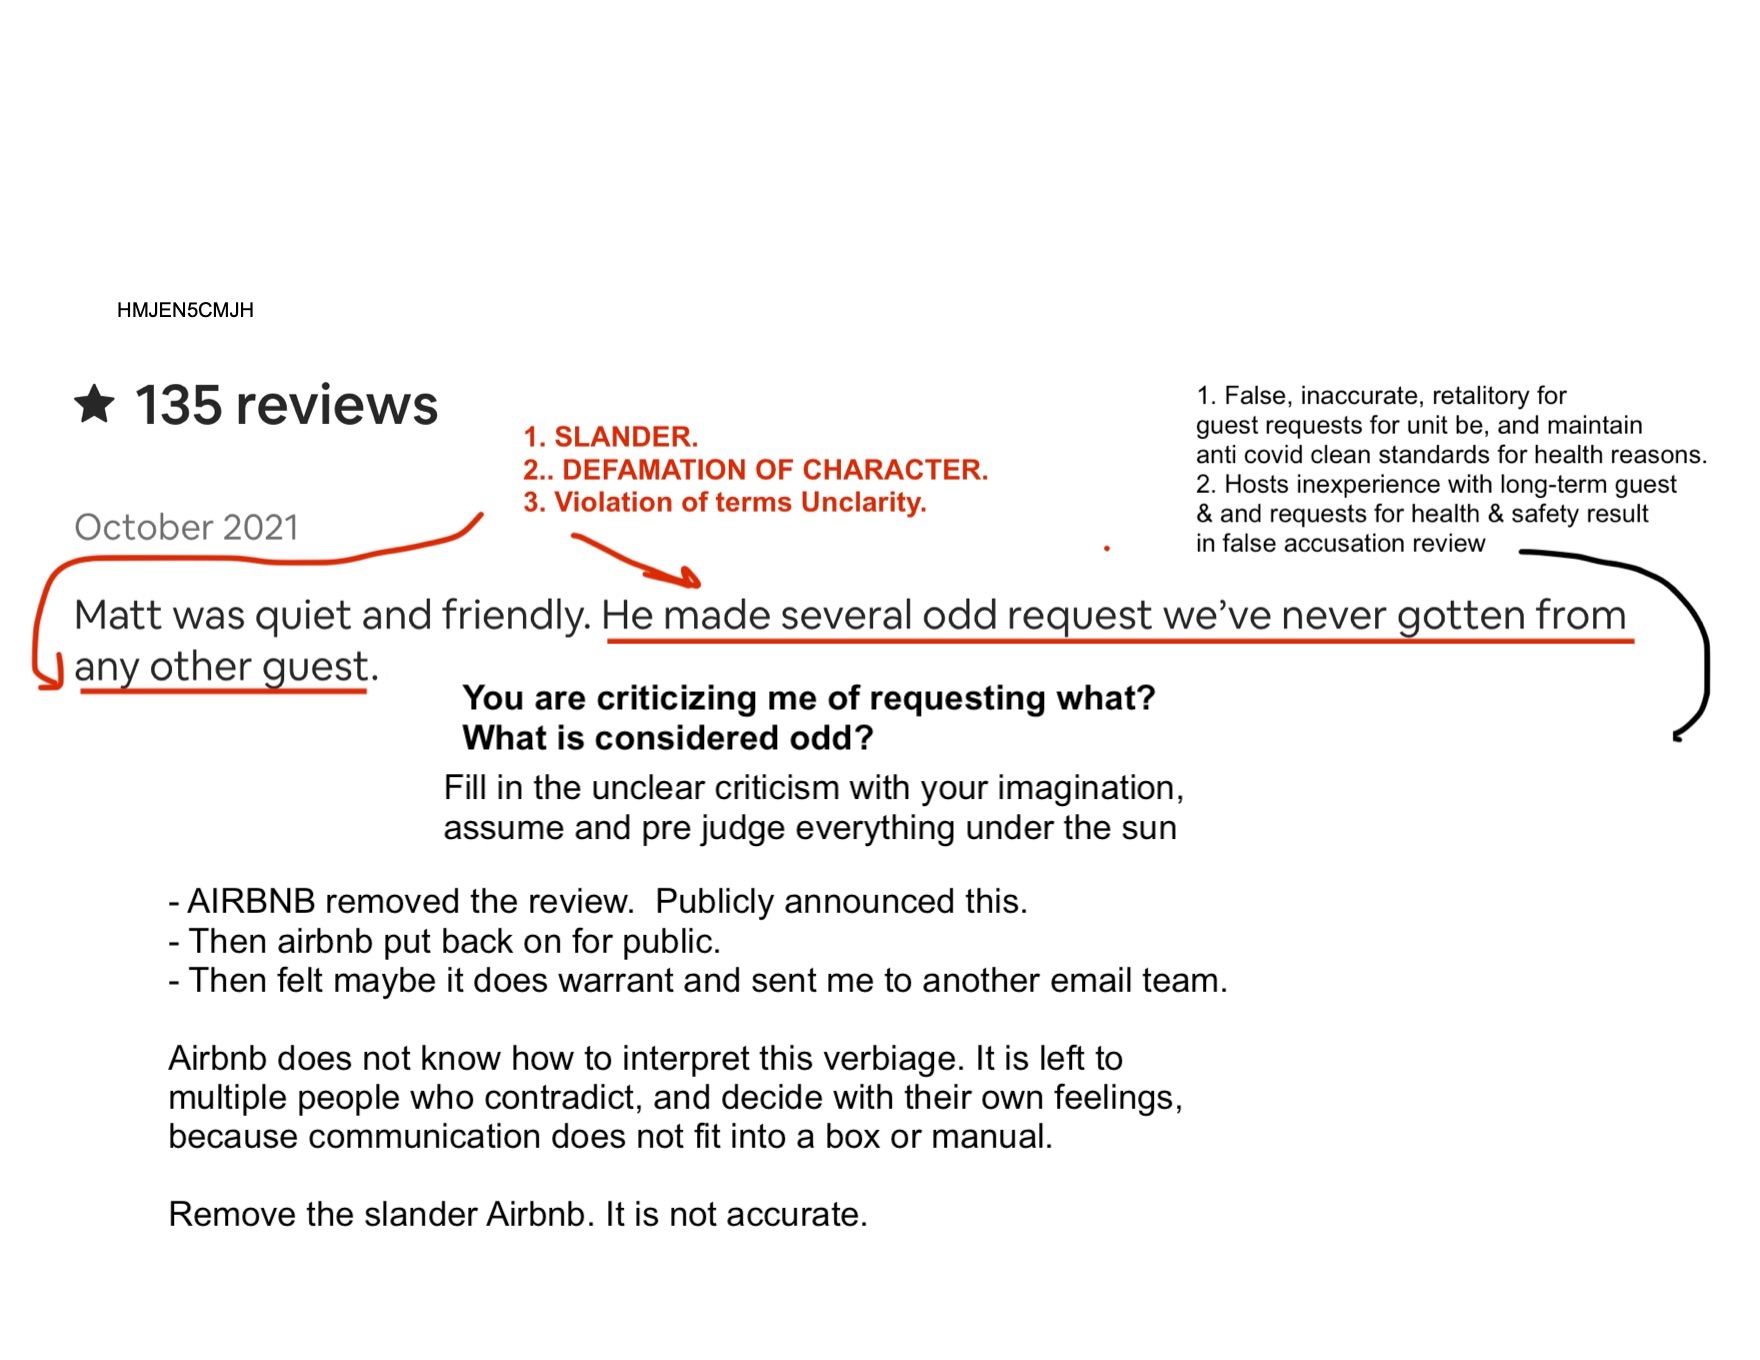 airbnb review violation1.jpg